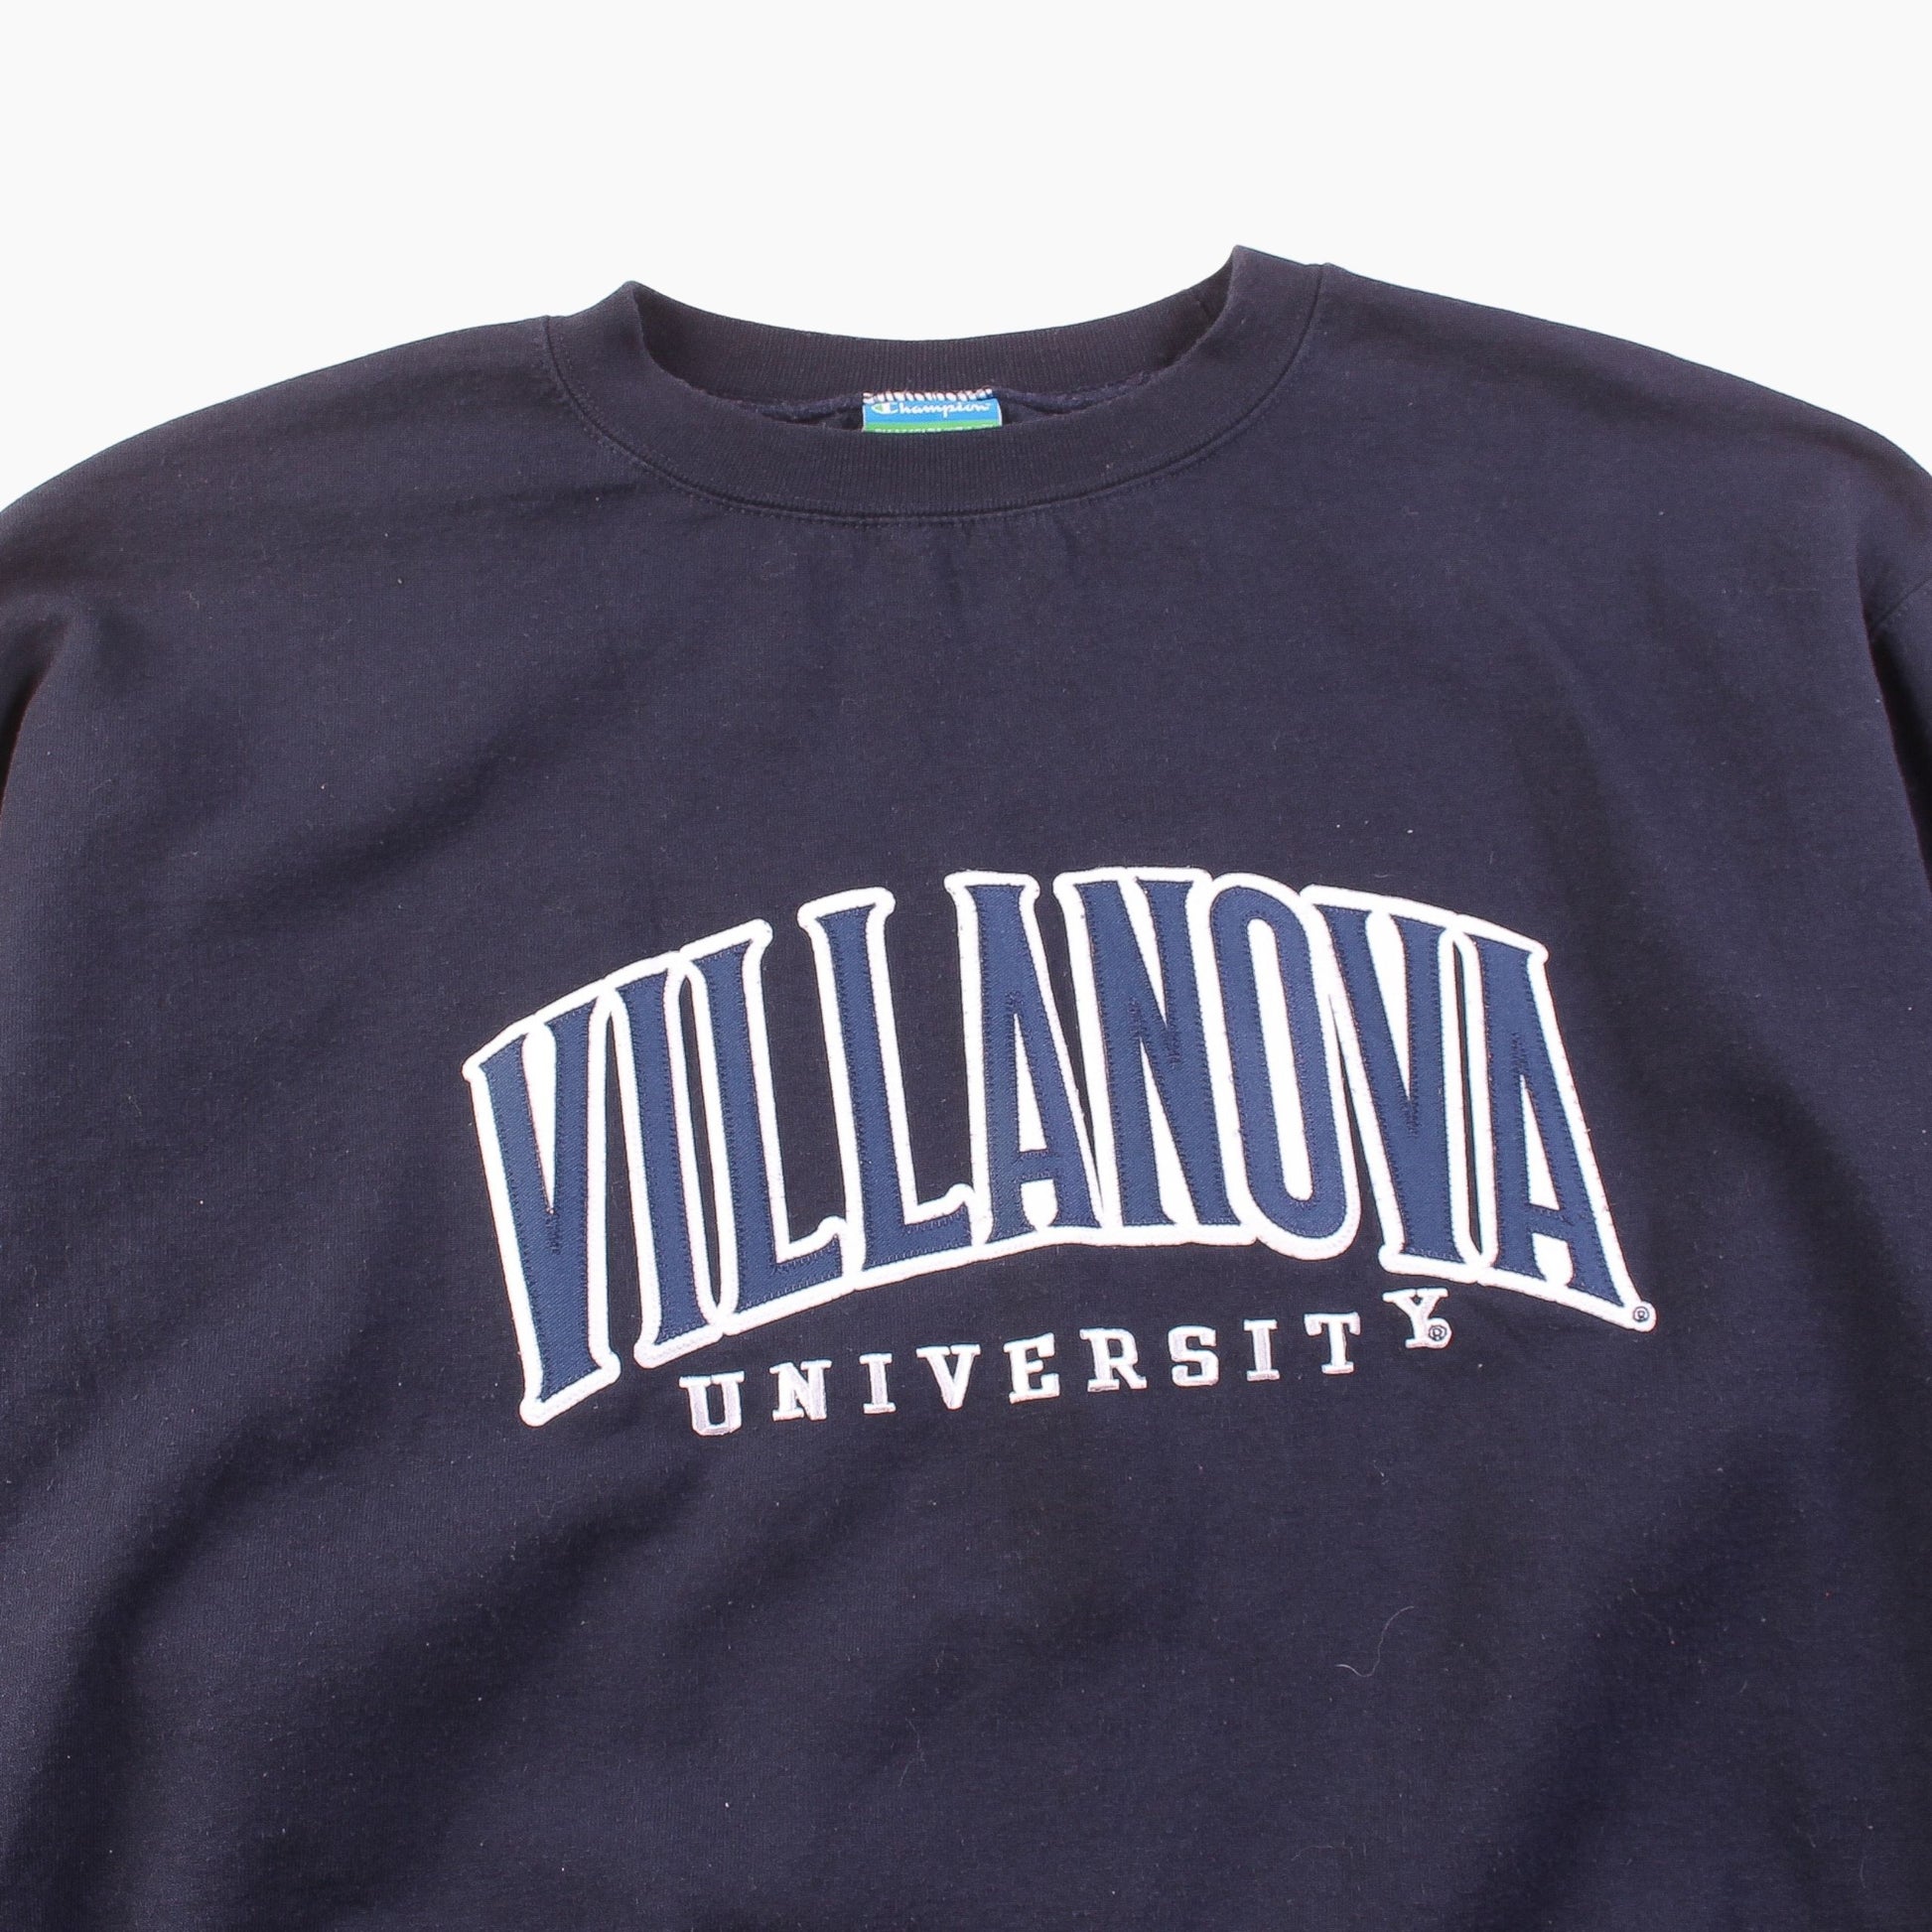 Vintage 'Villanova' Champion Sweatshirt - American Madness